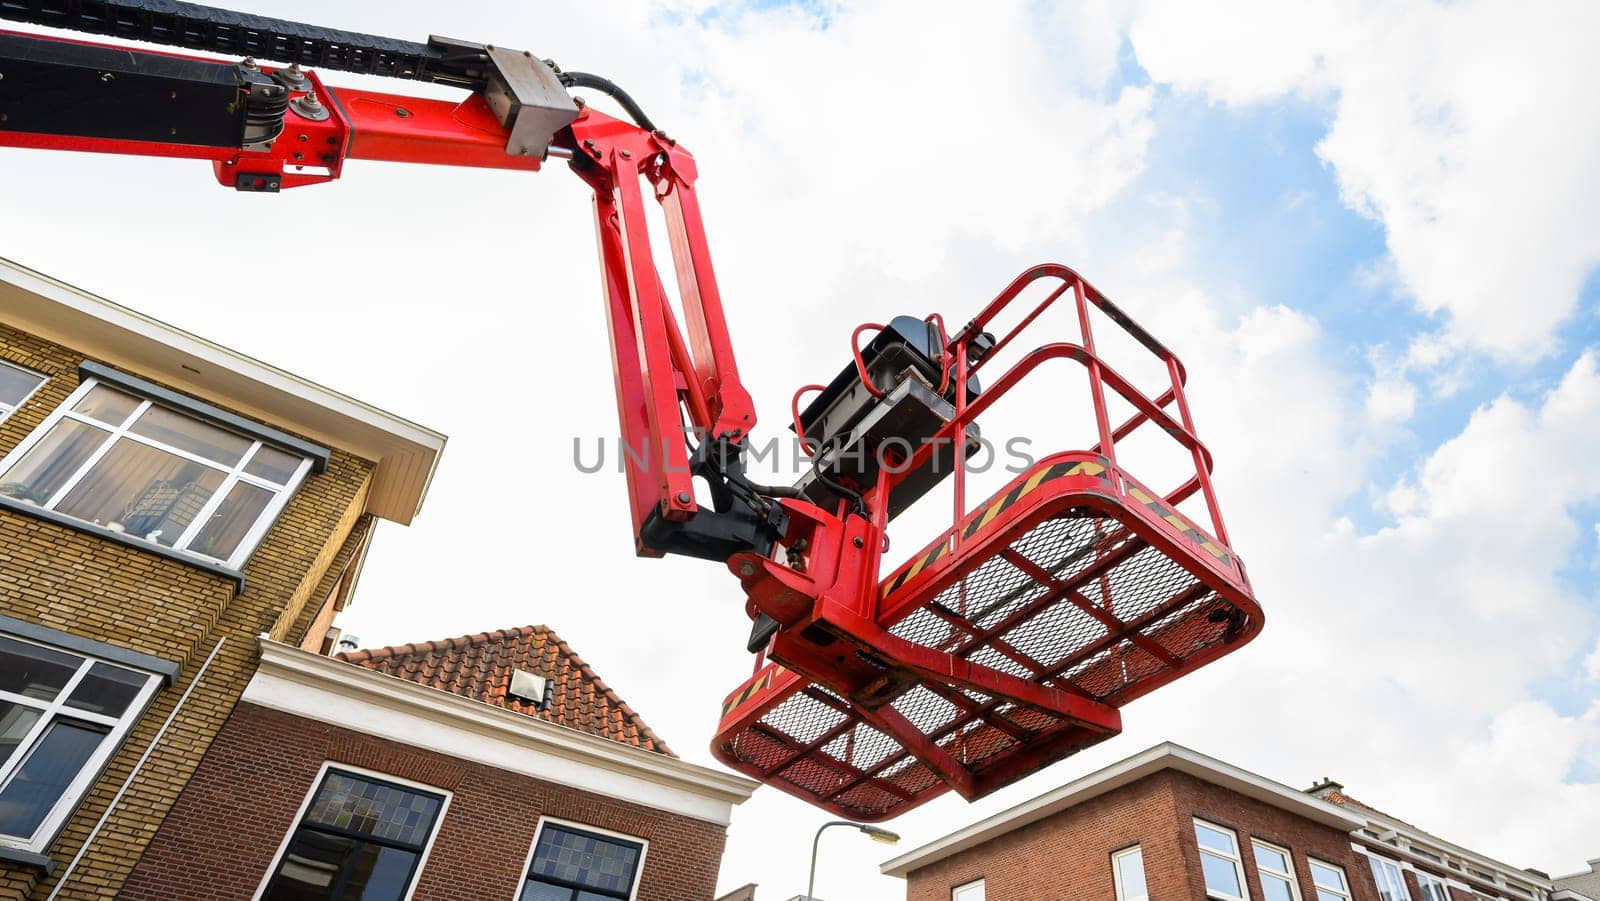 Aerial work platform for city communication repair services. Elevating cherry picker at europaen city street